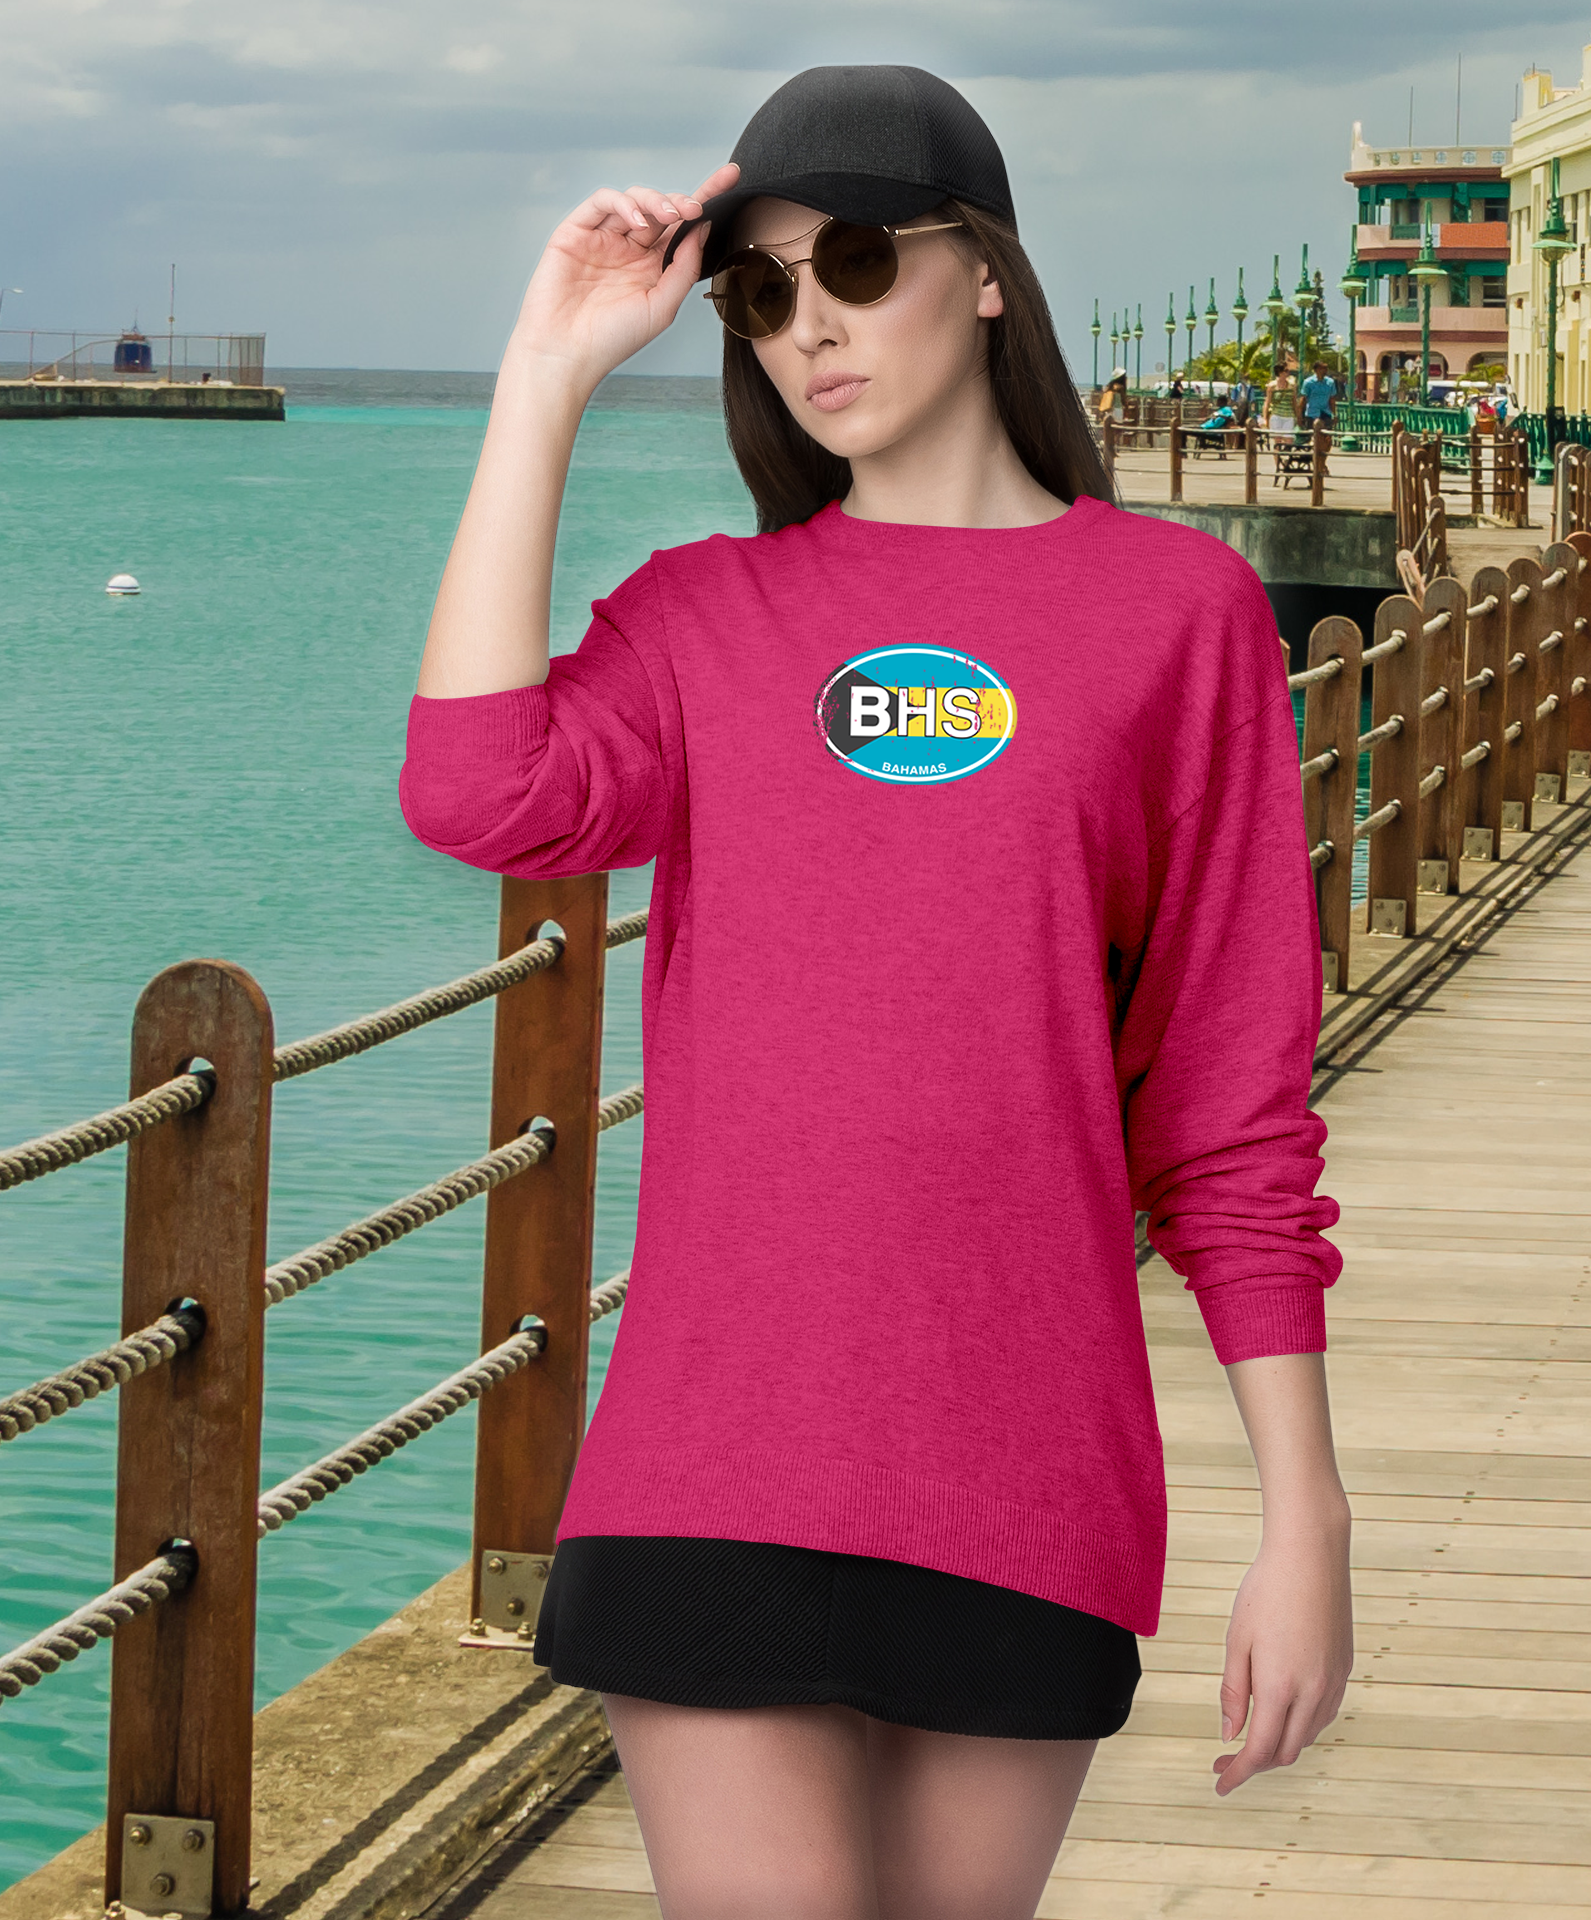 Bahamas Women's Flag Long Sleeve T-Shirts - My Destination Location